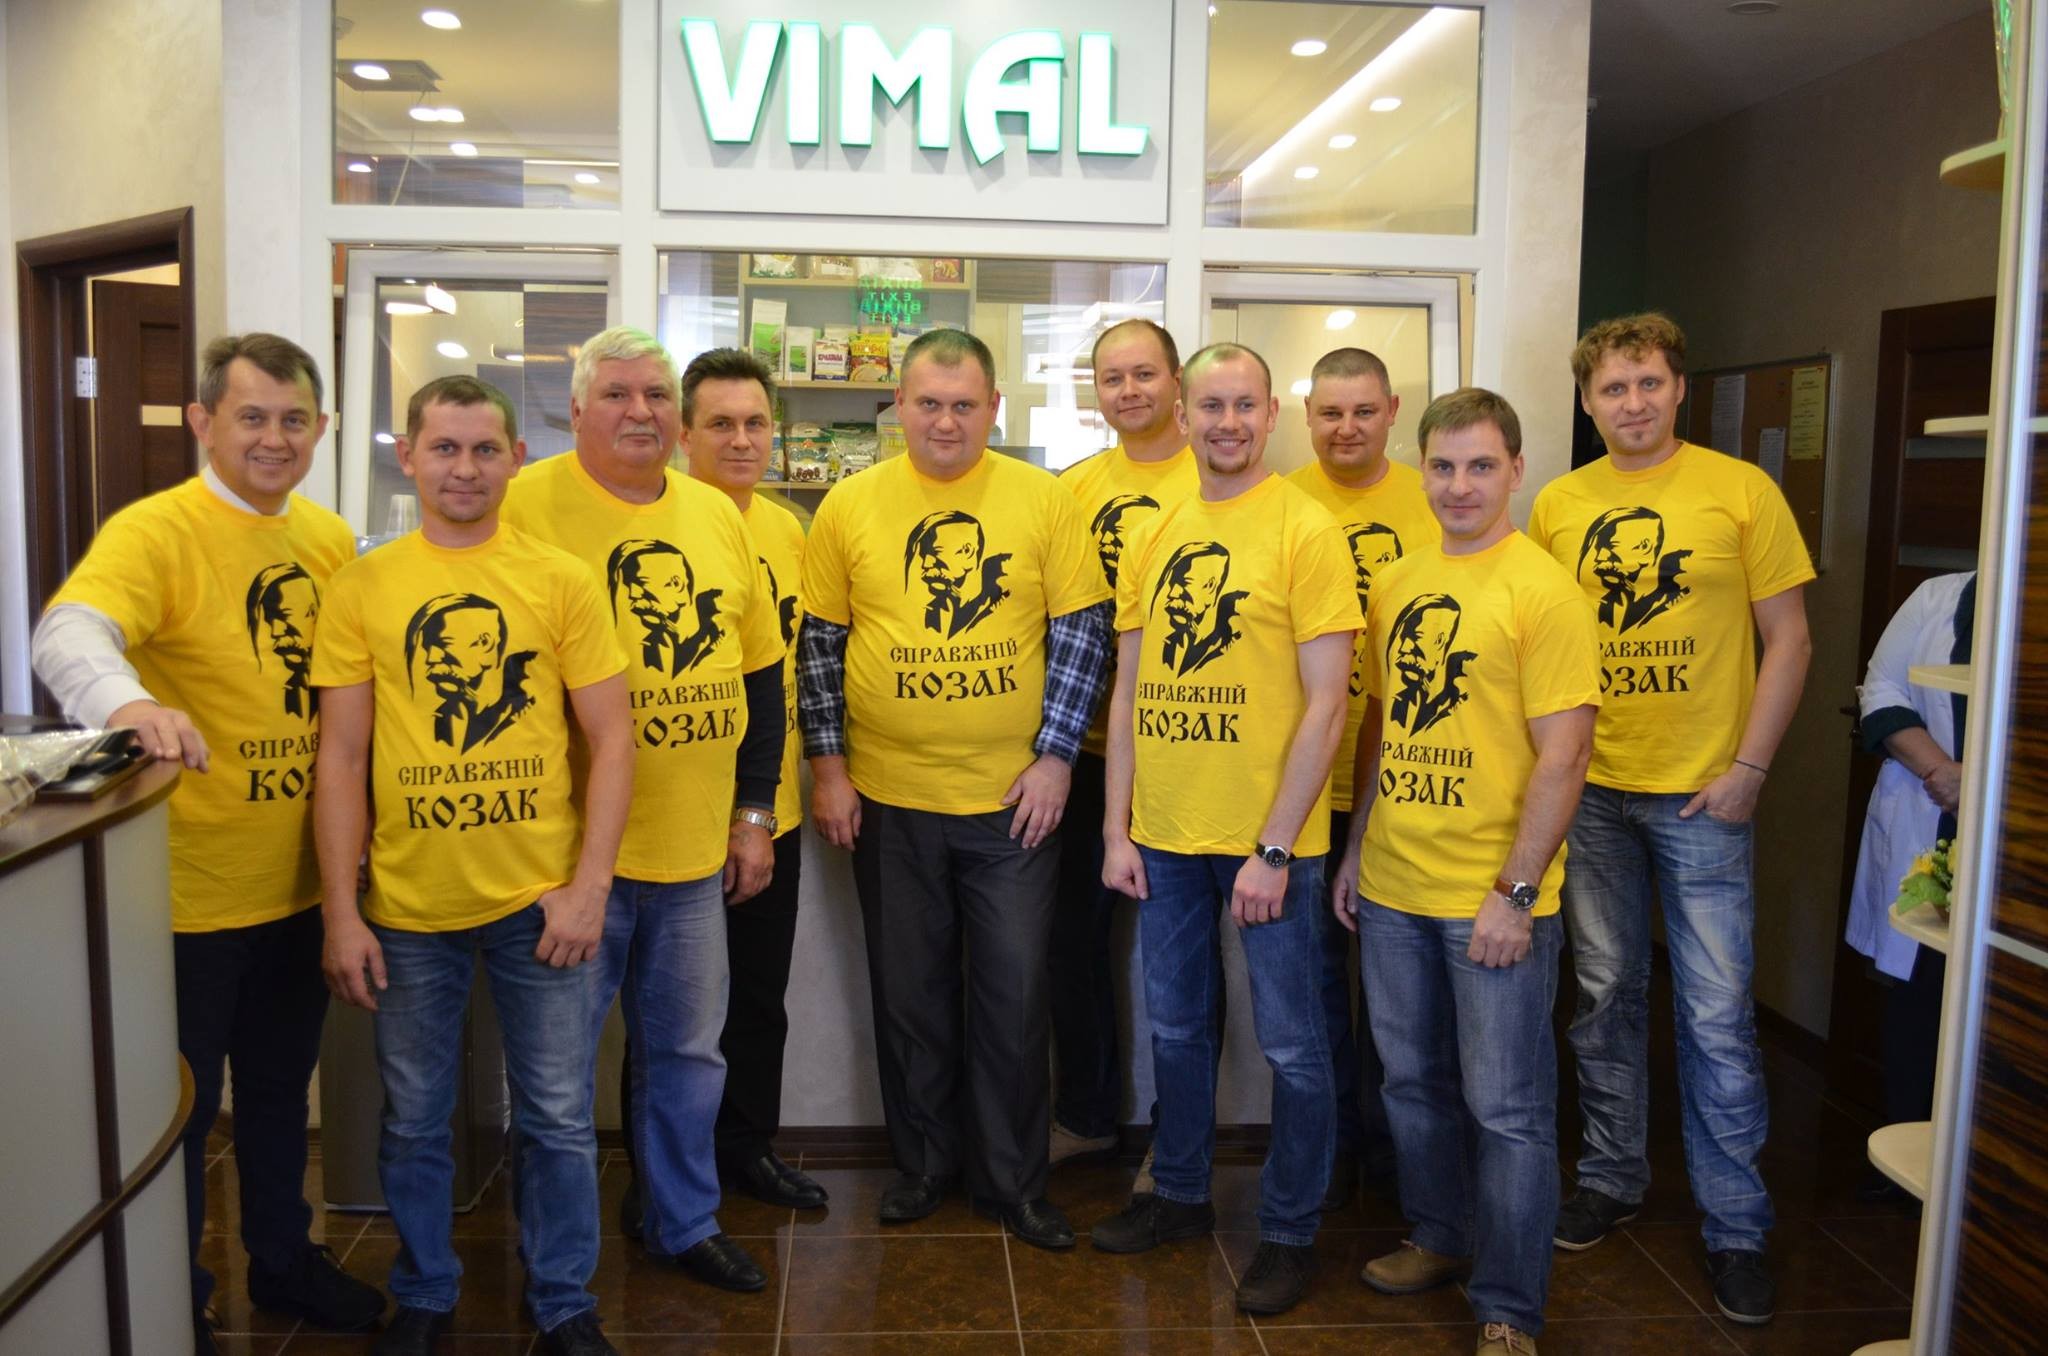 Cossacks from VIMAL